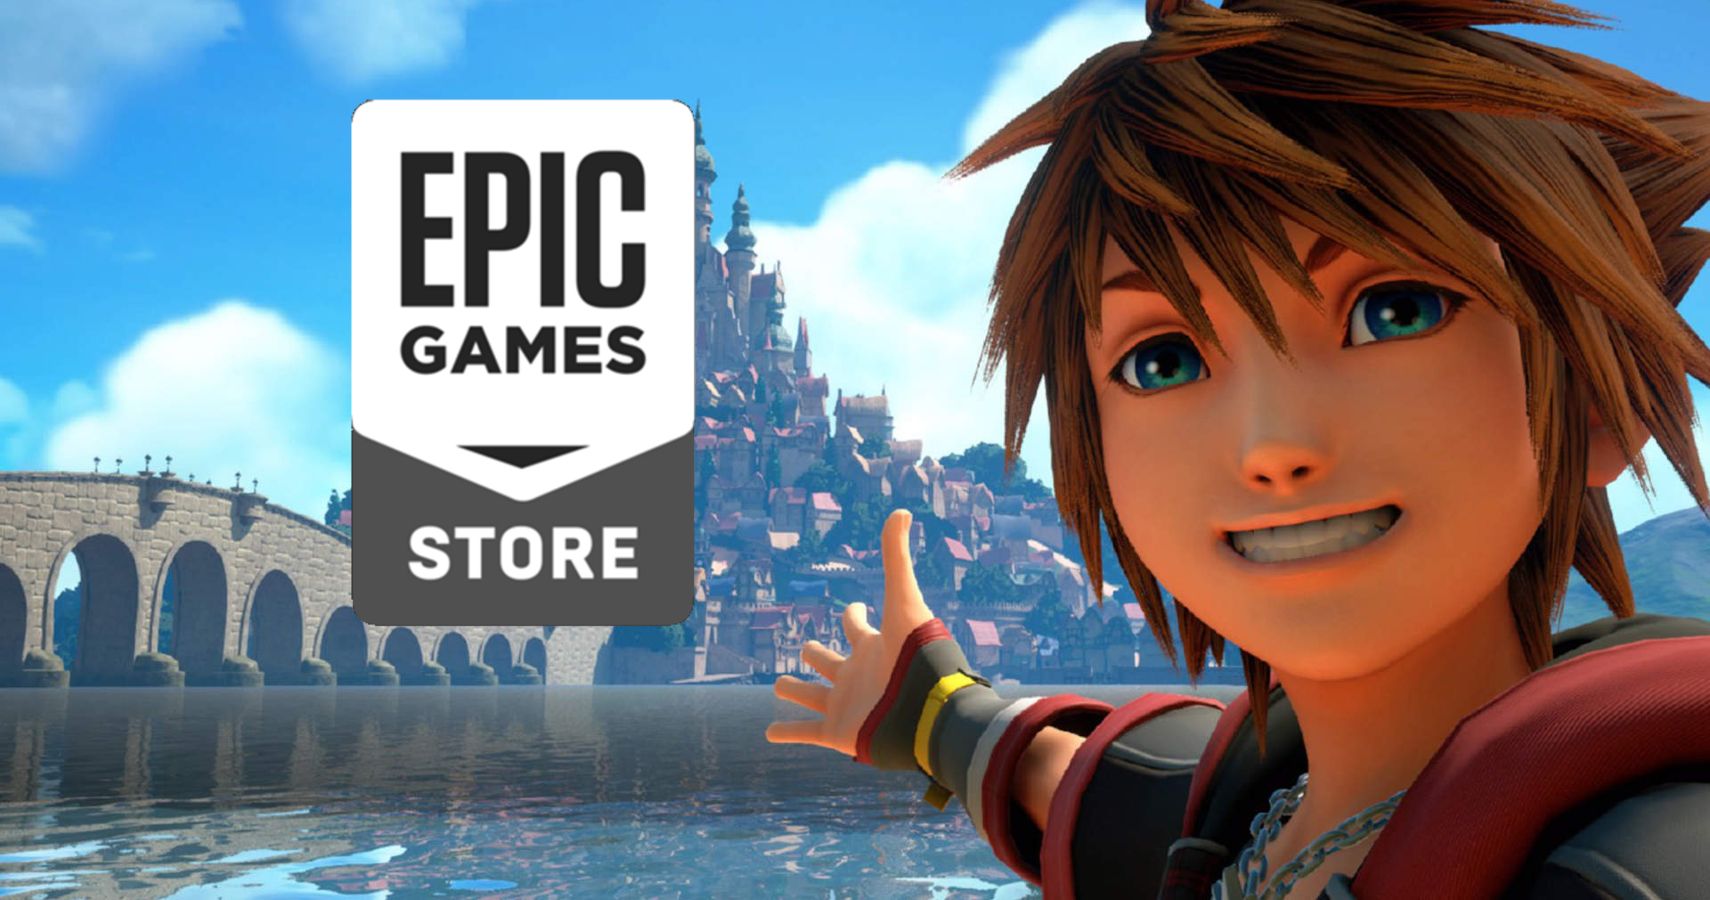 Sora gesturing at a Epic Games Store logo